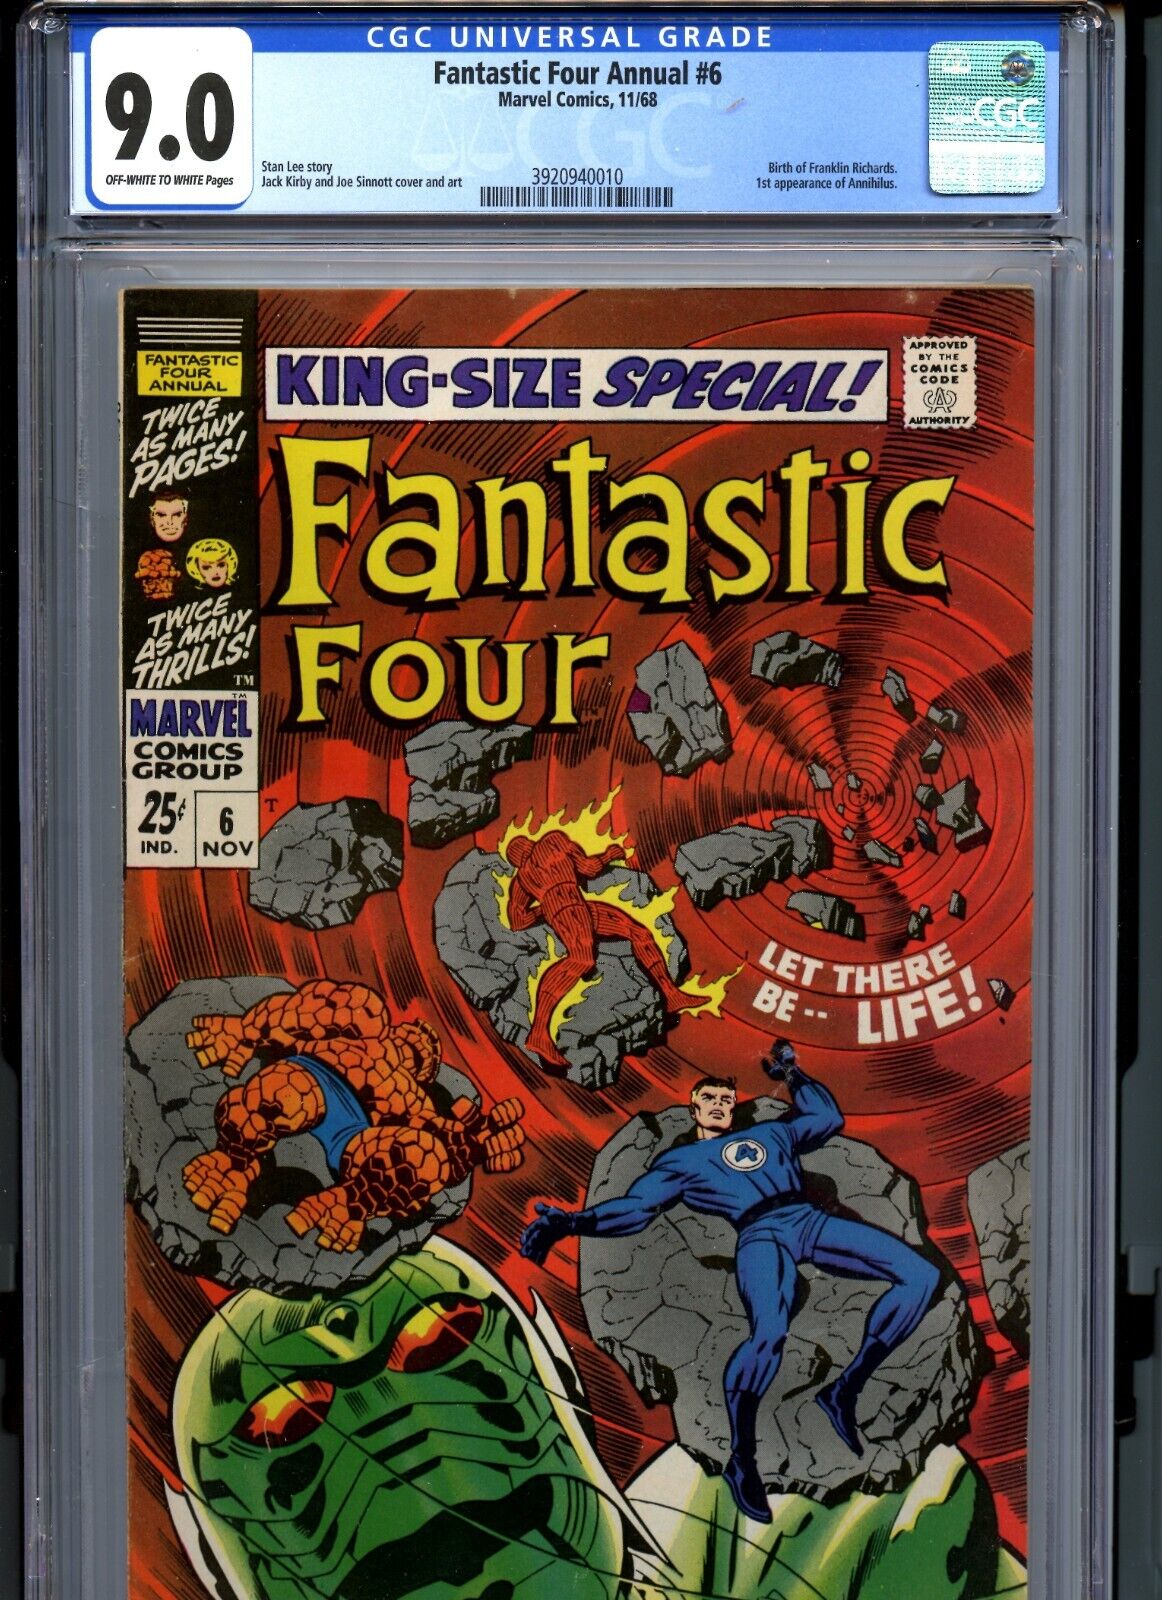 CGC 90 Fantastic Four Annual 6 Birth of Franklin Richards 1st App Annihilus